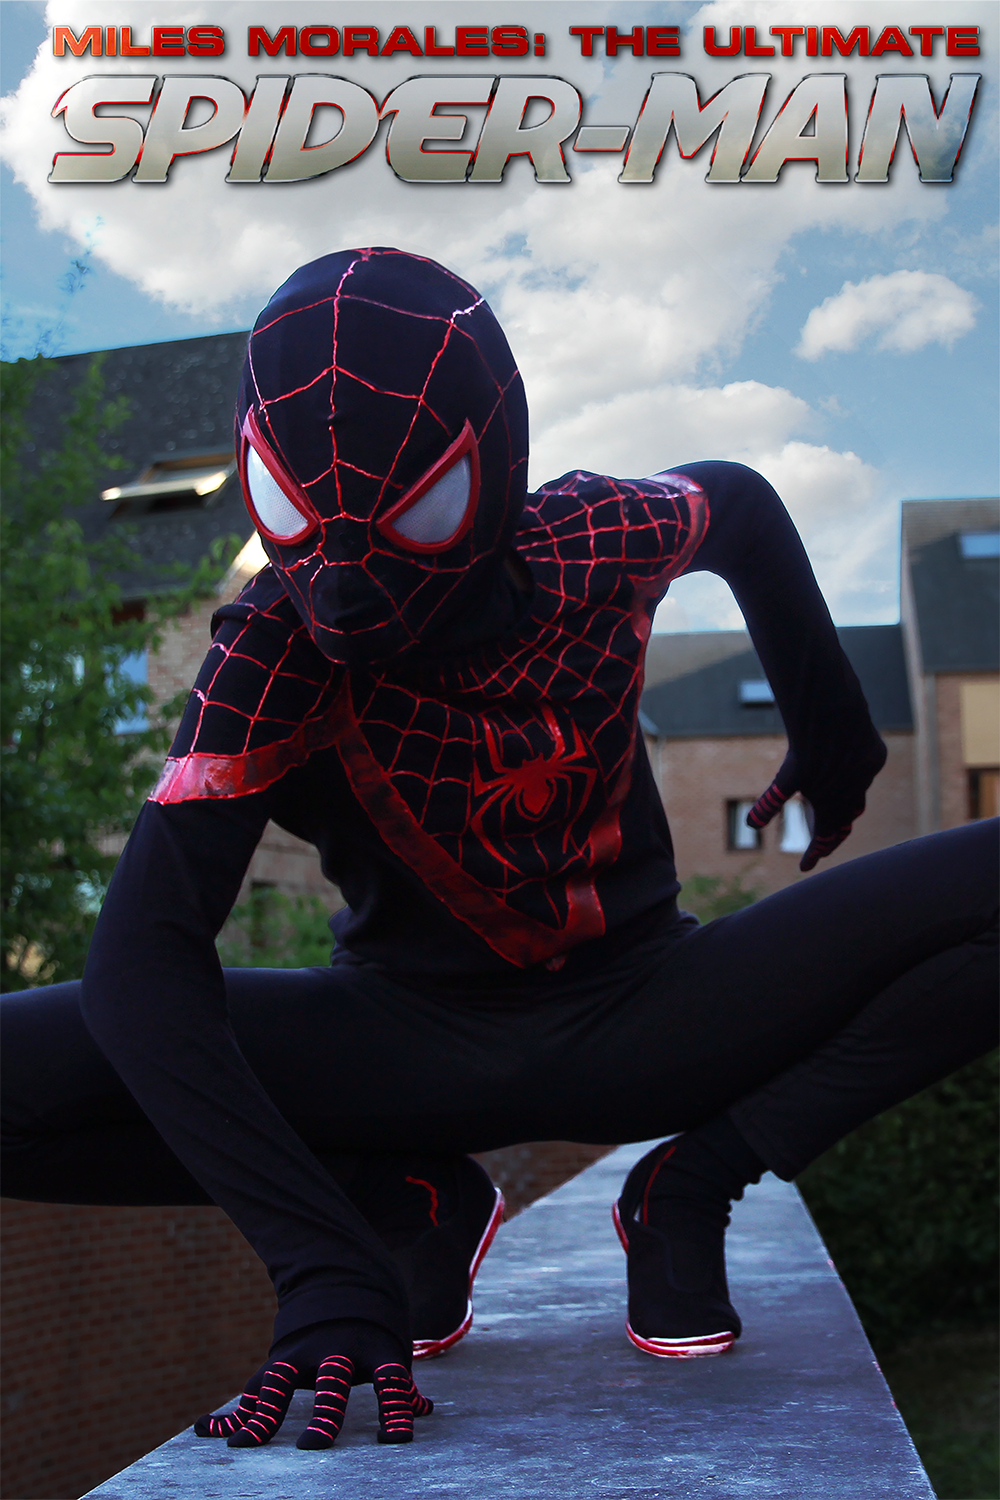 Affordable Spider-Man eye mesh!  RPF Costume and Prop Maker Community